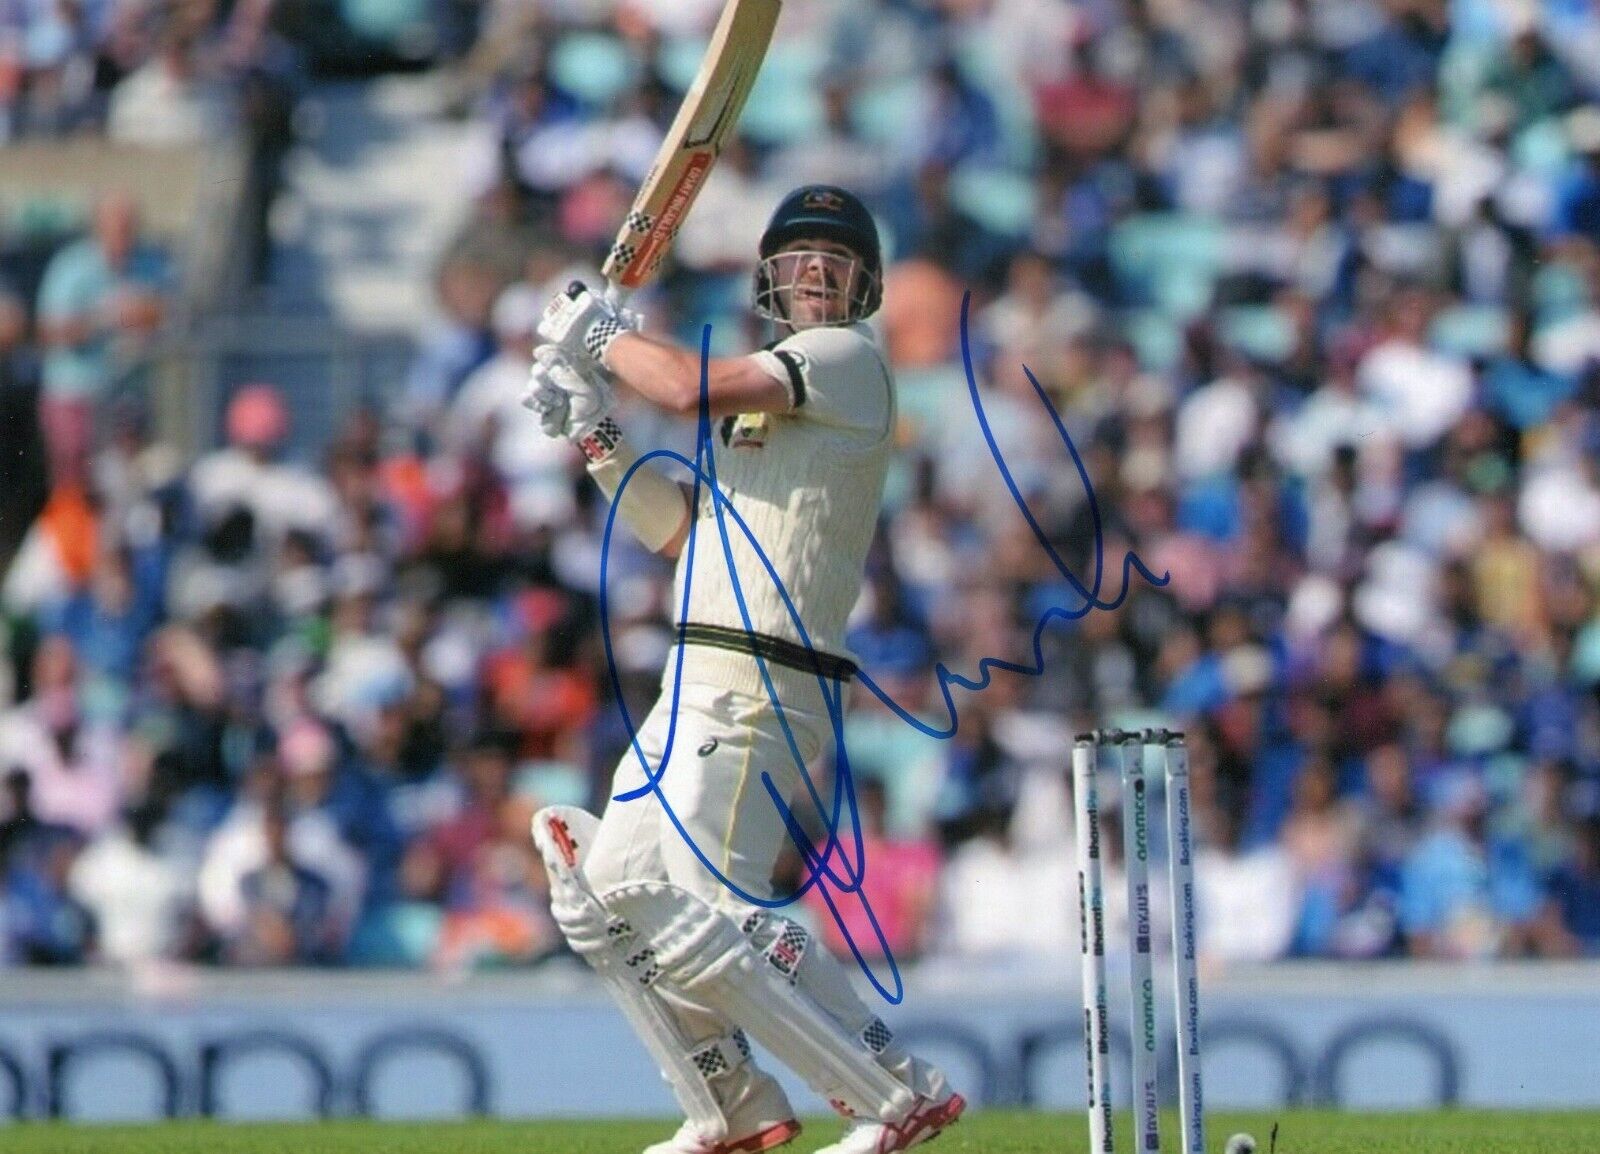 Original Autographed Photo of Australian Cricketer Travis Head